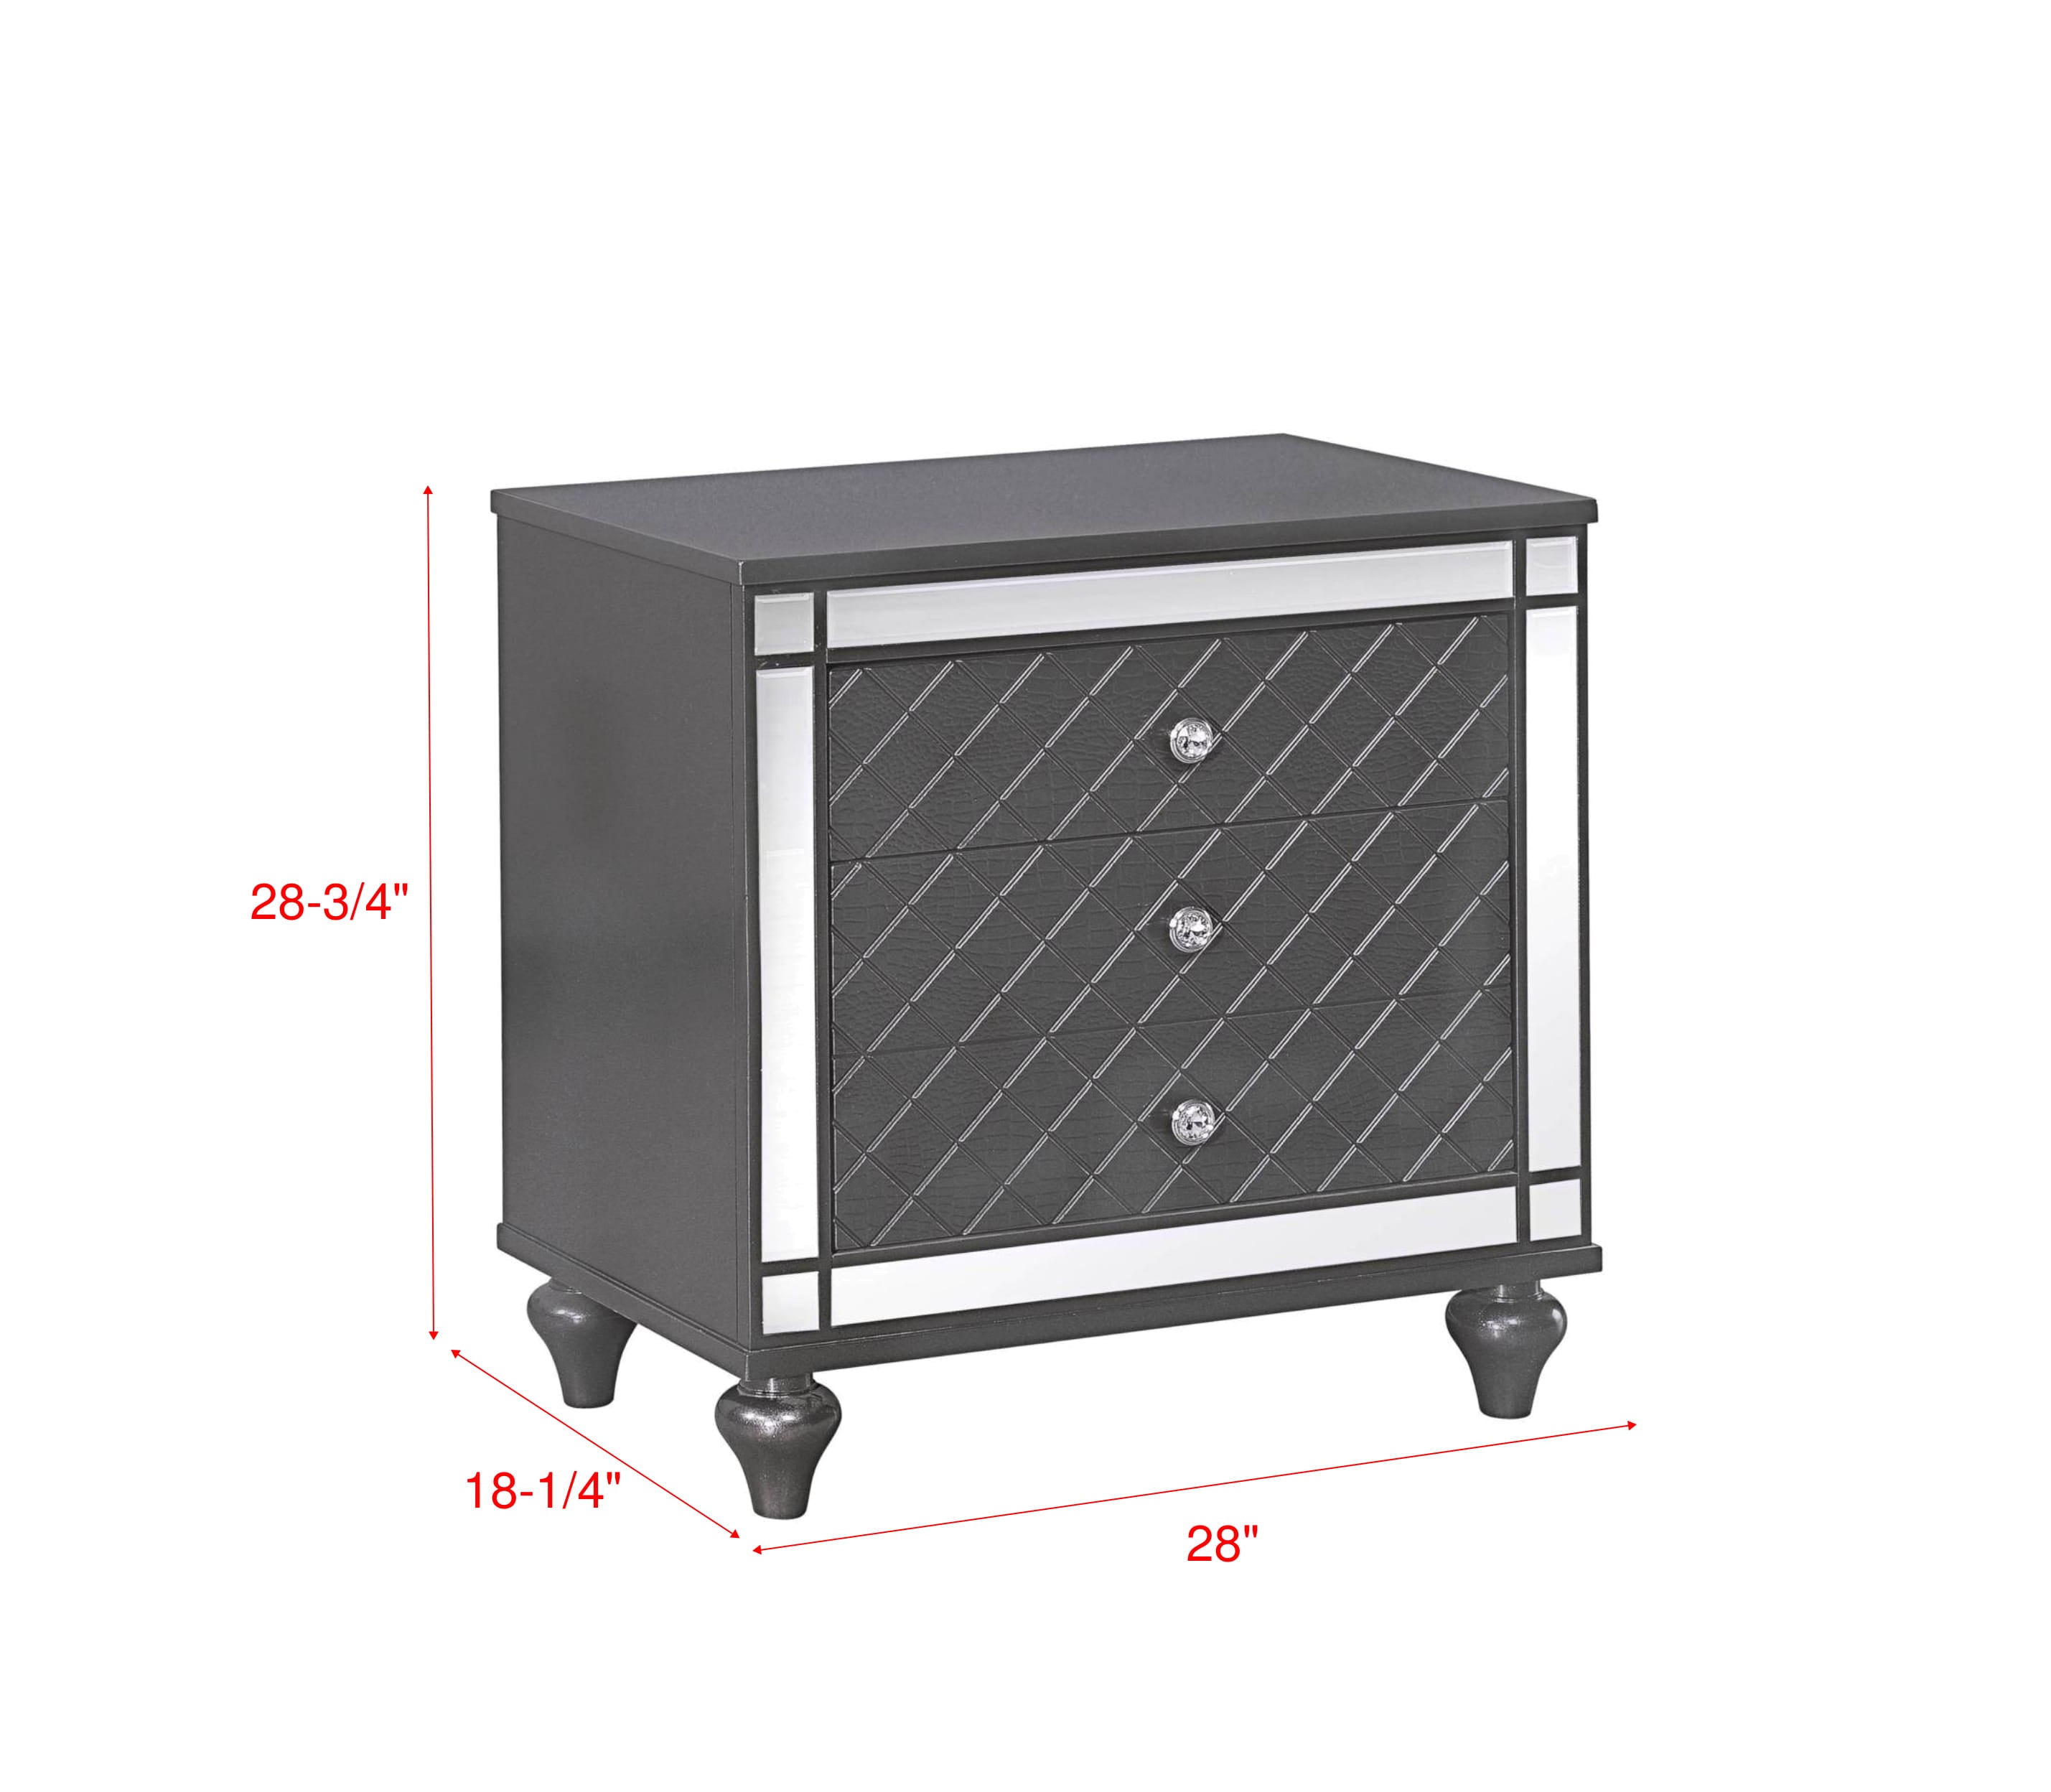 Refino Gray LED Upholstered Panel Bedroom Set - SET | B1670-K-HB | B1670-K-FB | B1670-KQ-RAIL | B1670-1 | B1670-11 | B1670-2 | B1670-4 - Bien Home Furniture &amp; Electronics